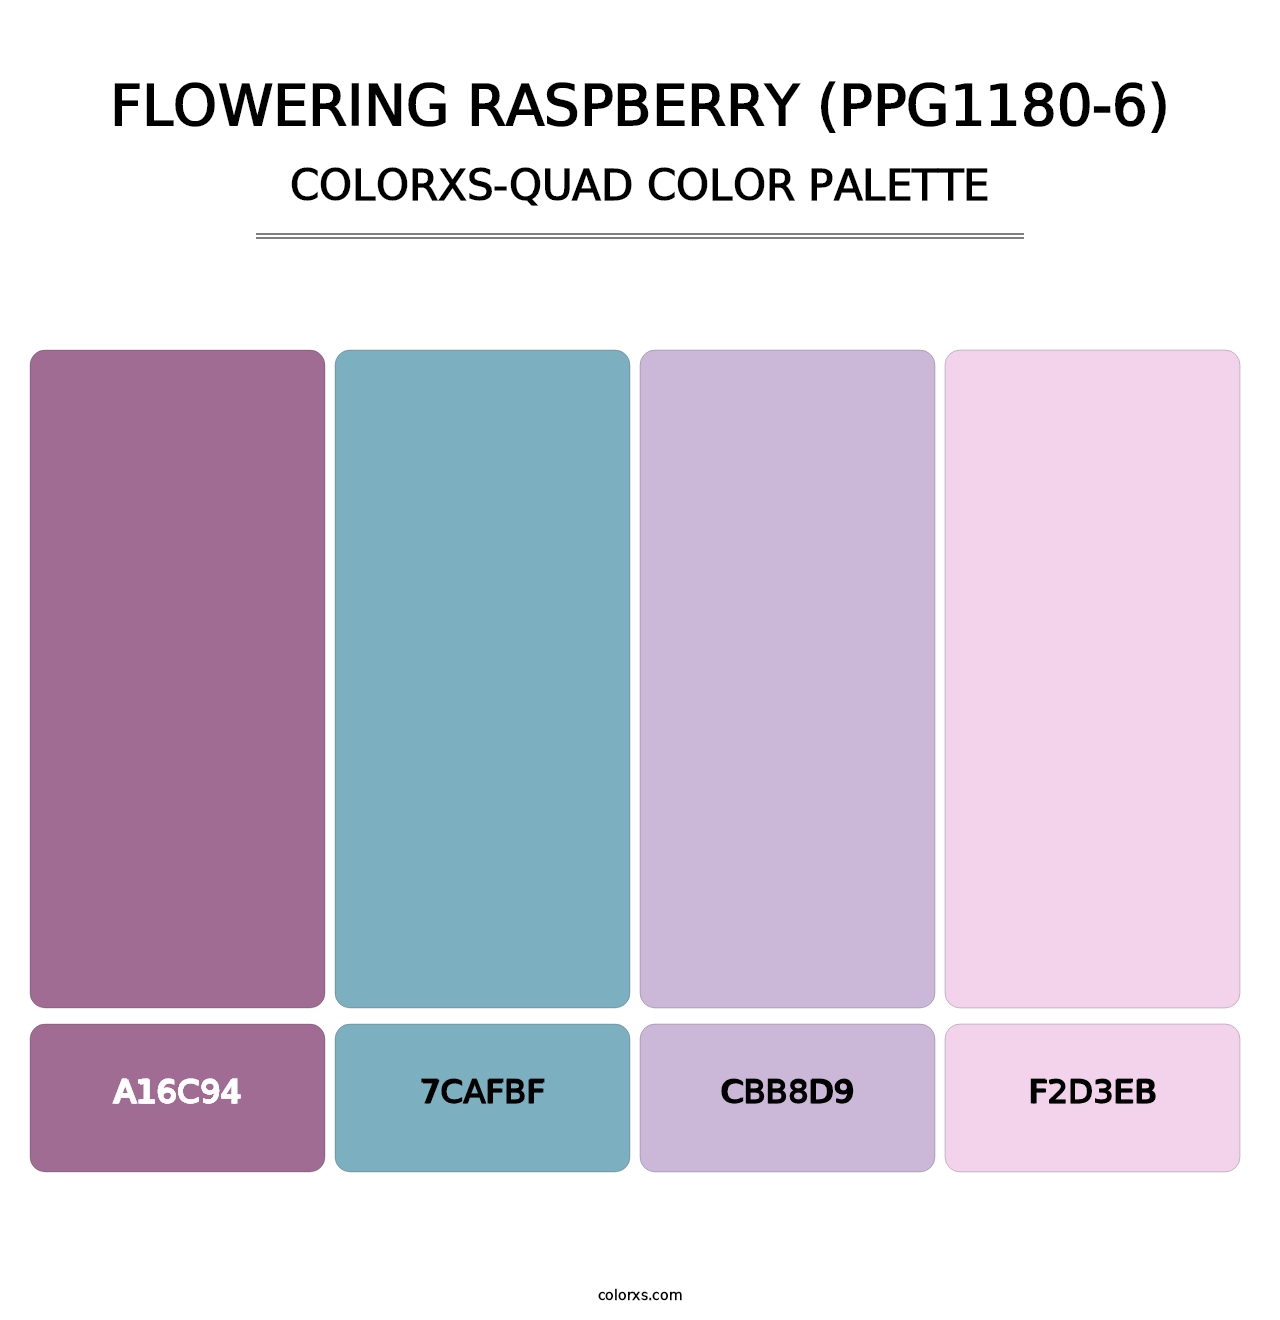 Flowering Raspberry (PPG1180-6) - Colorxs Quad Palette